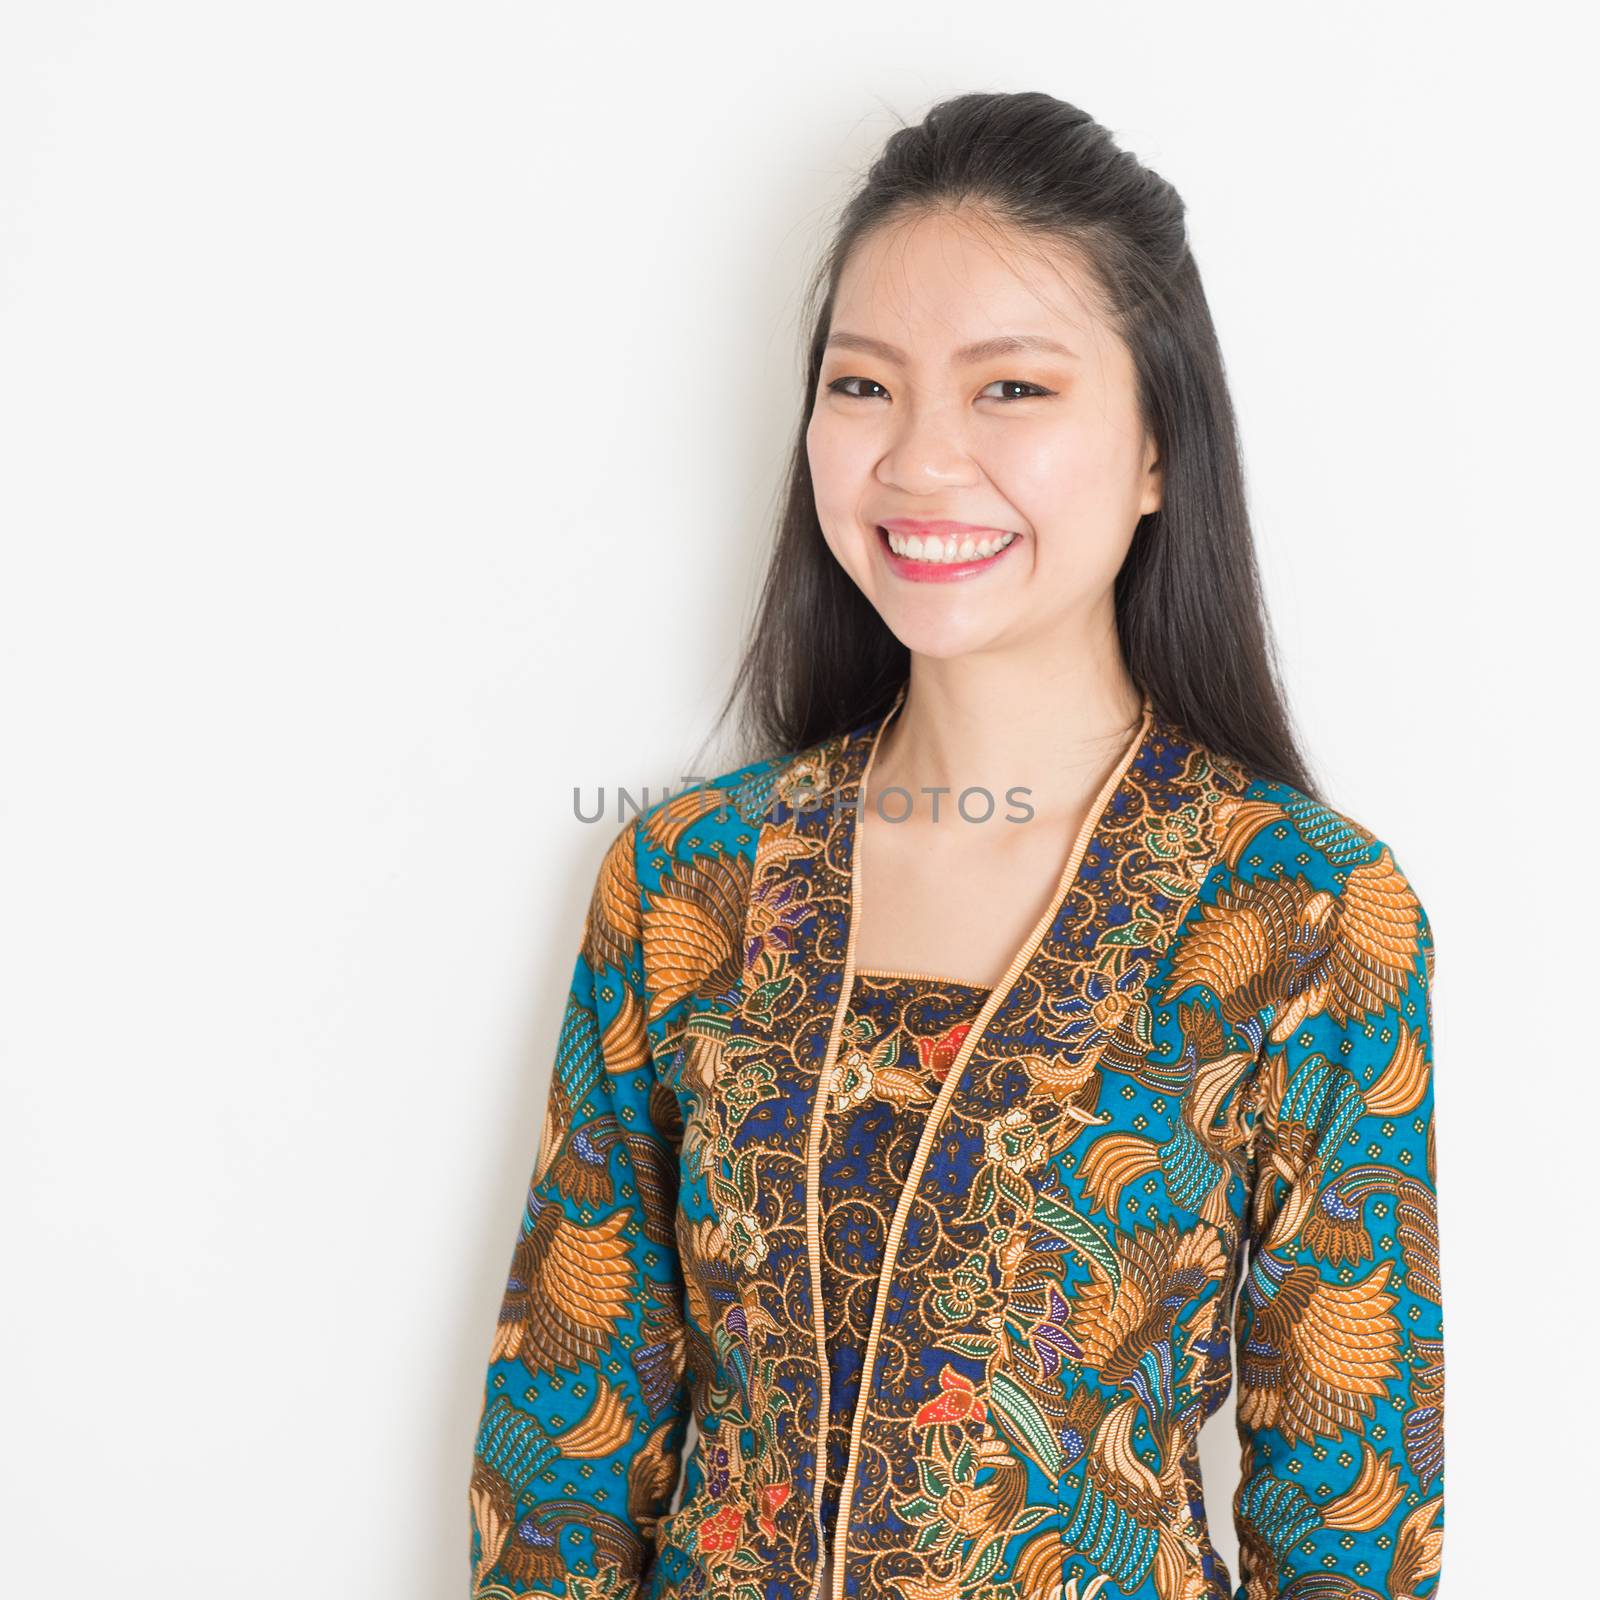 Portrait of Southeast Asian woman in batik dress on plain background.